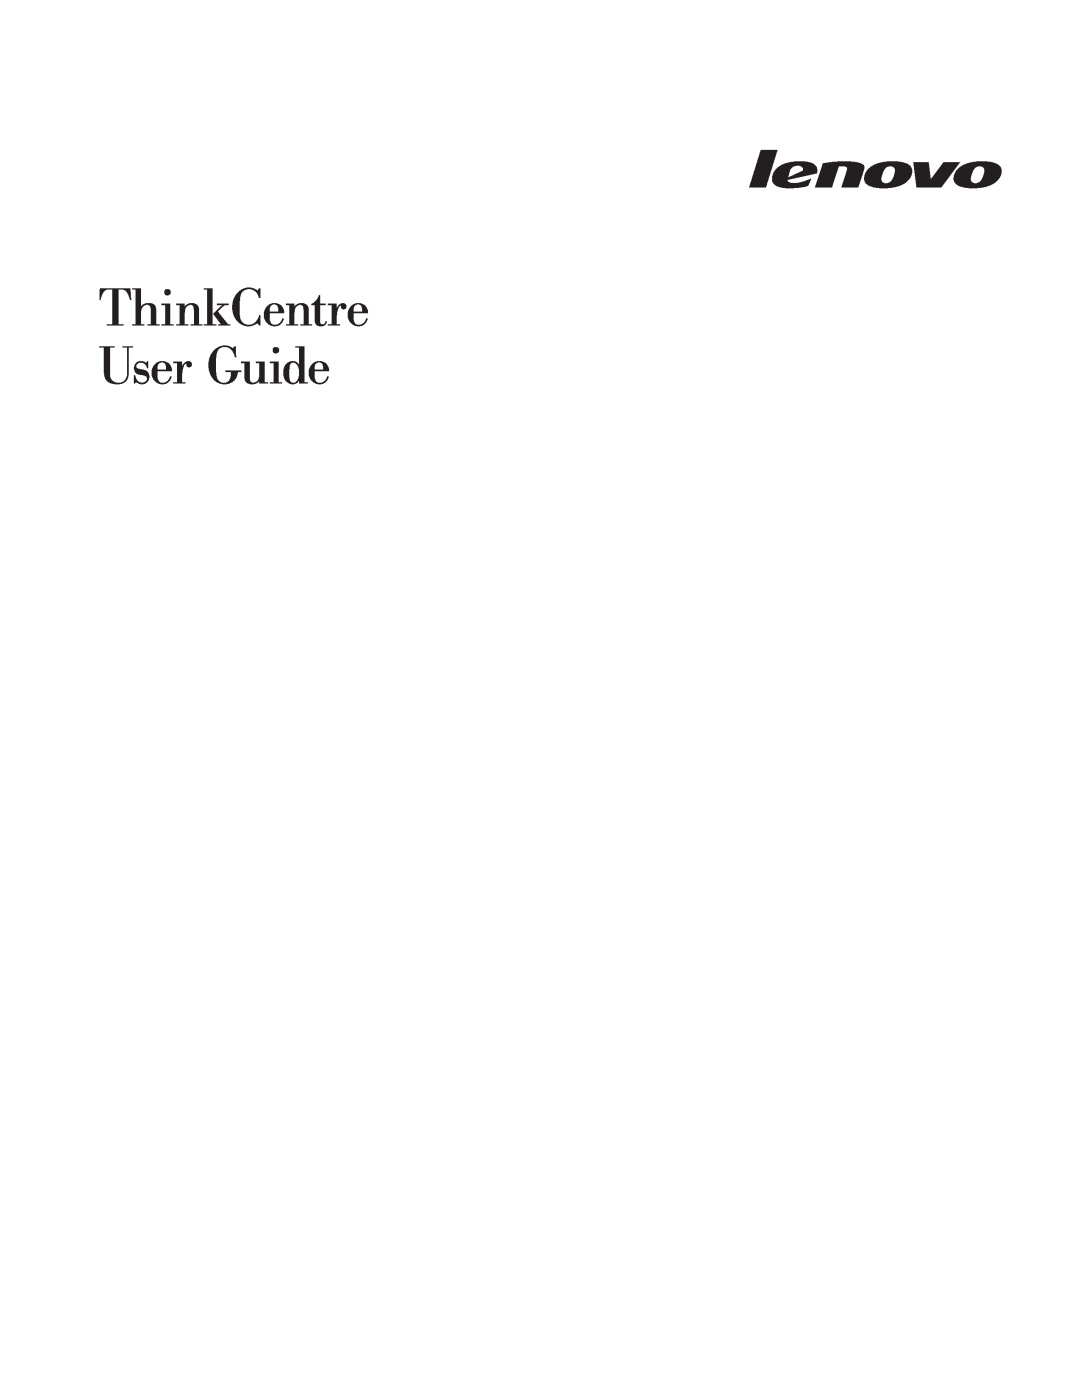 Lenovo 7094, 6177, 6176, 7064, 7065, 7066, 6178 manual ThinkCentre User Guide 